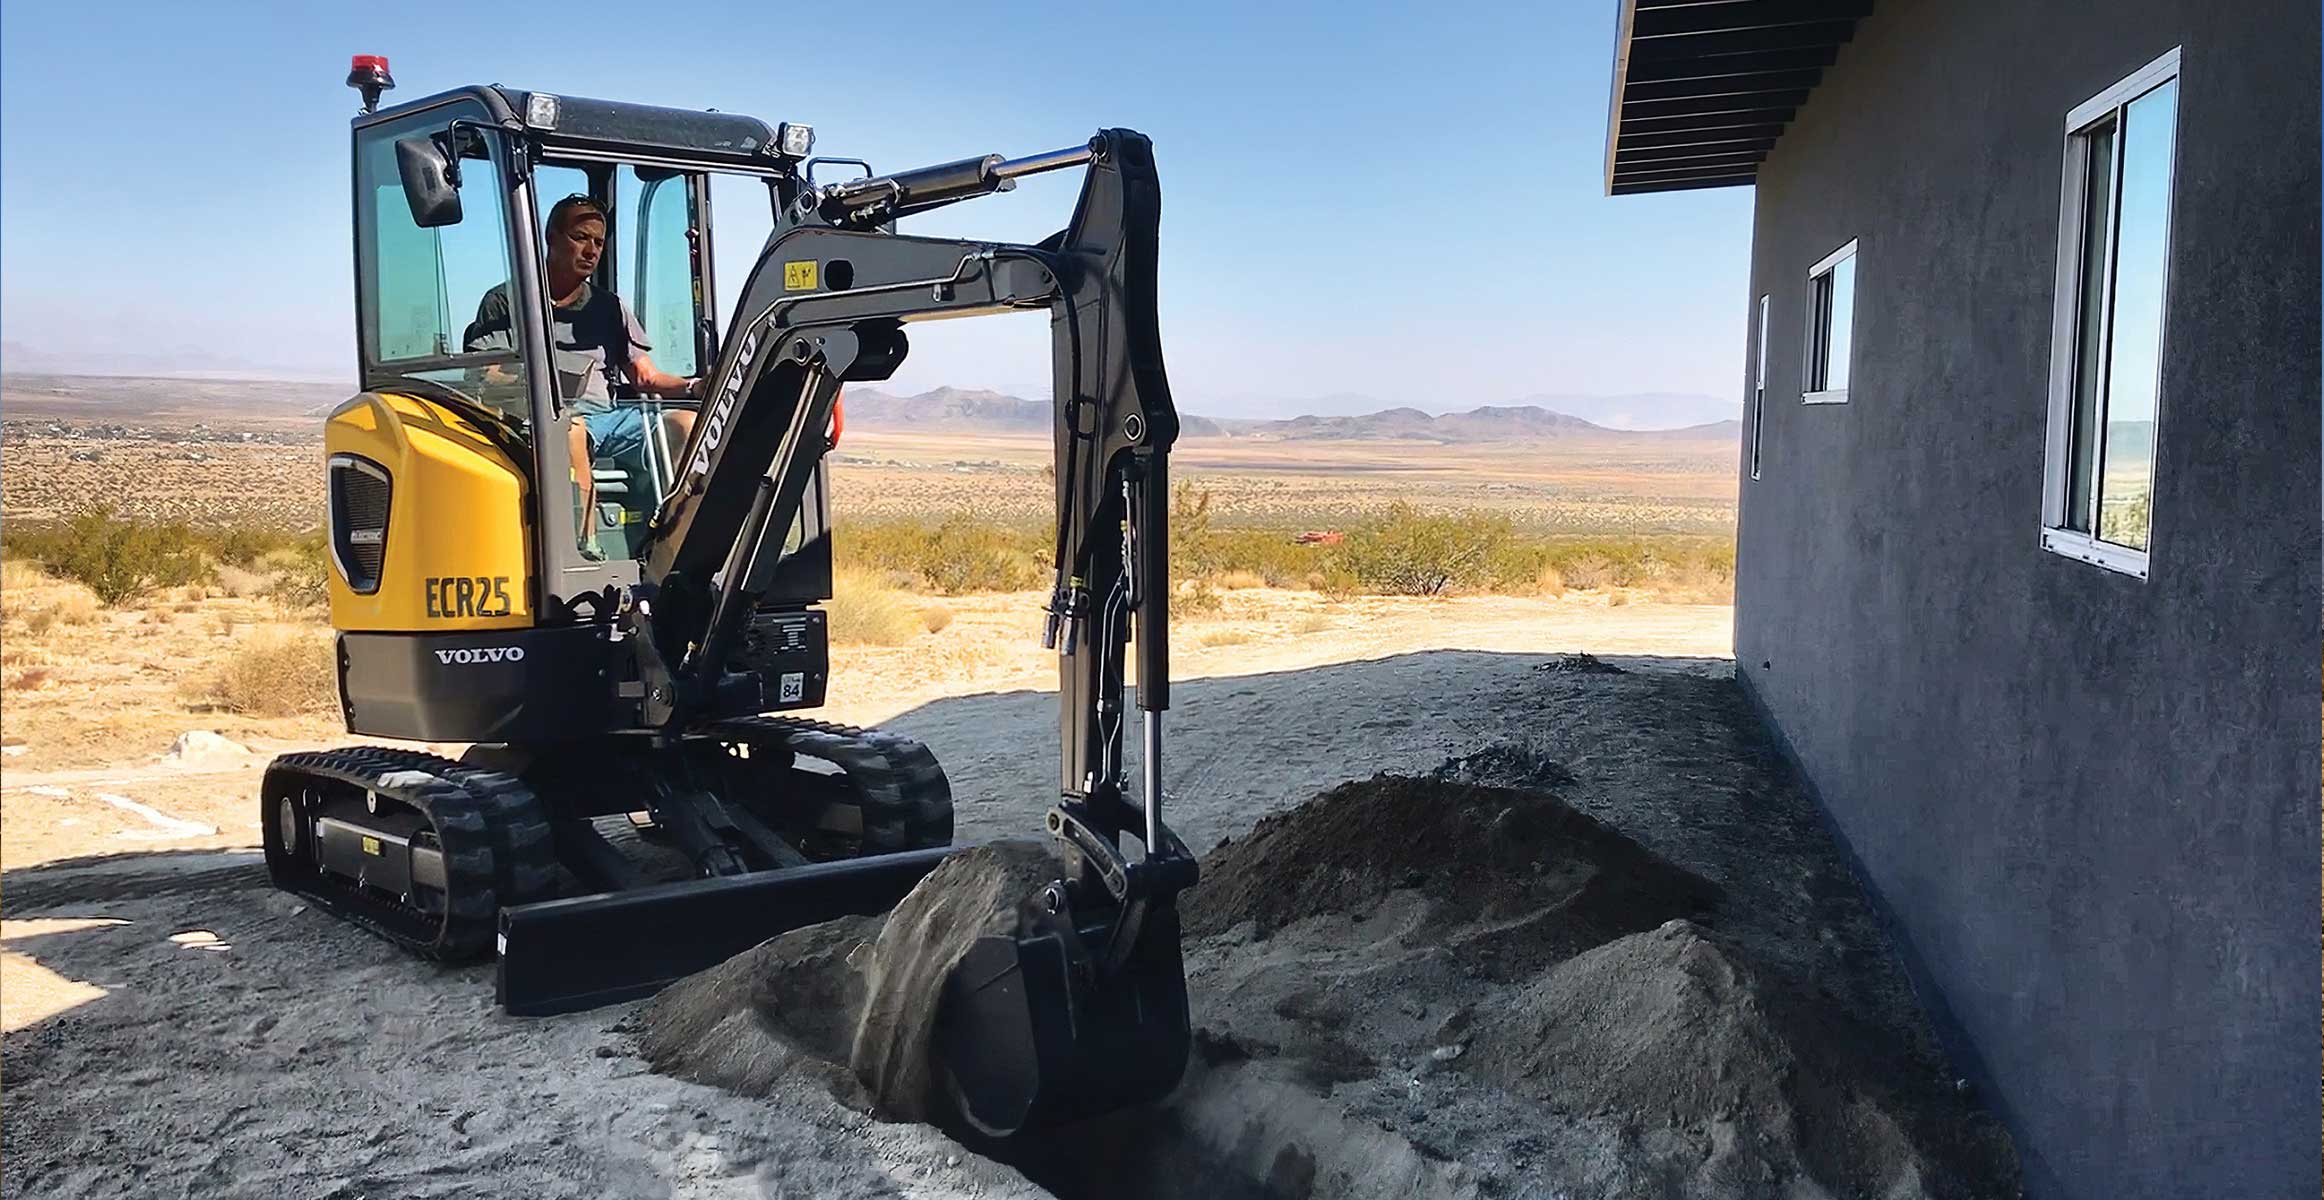 Green construction equipment makes its mark in the desert